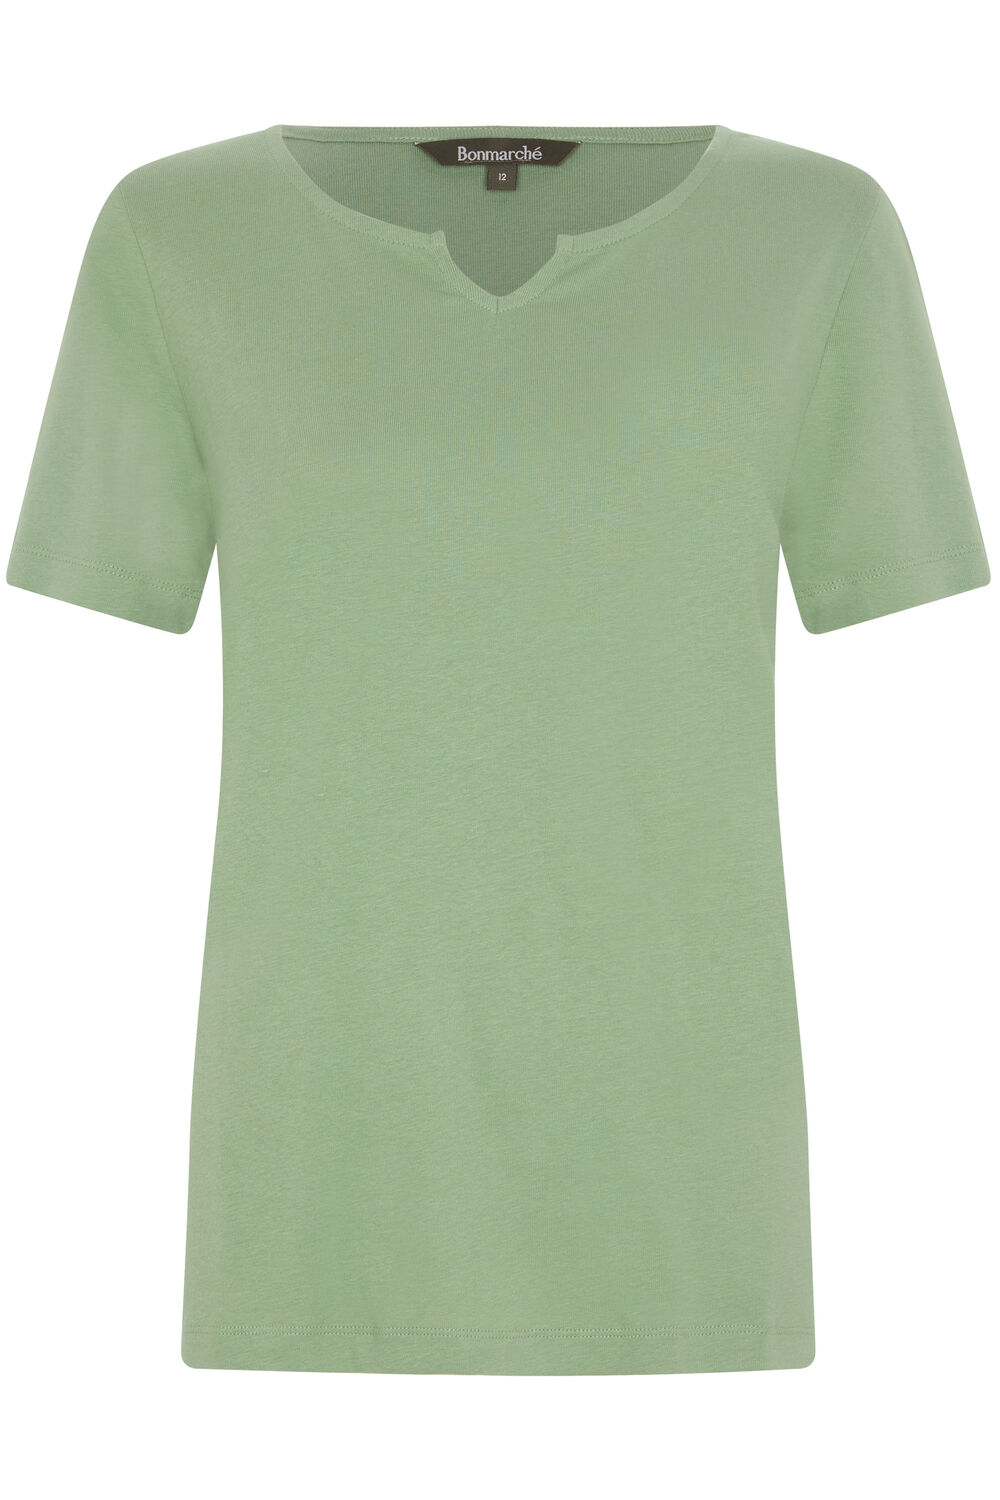 Bonmarche Khaki Short Sleeve Plain Notch Neck T-Shirt, Size: 10